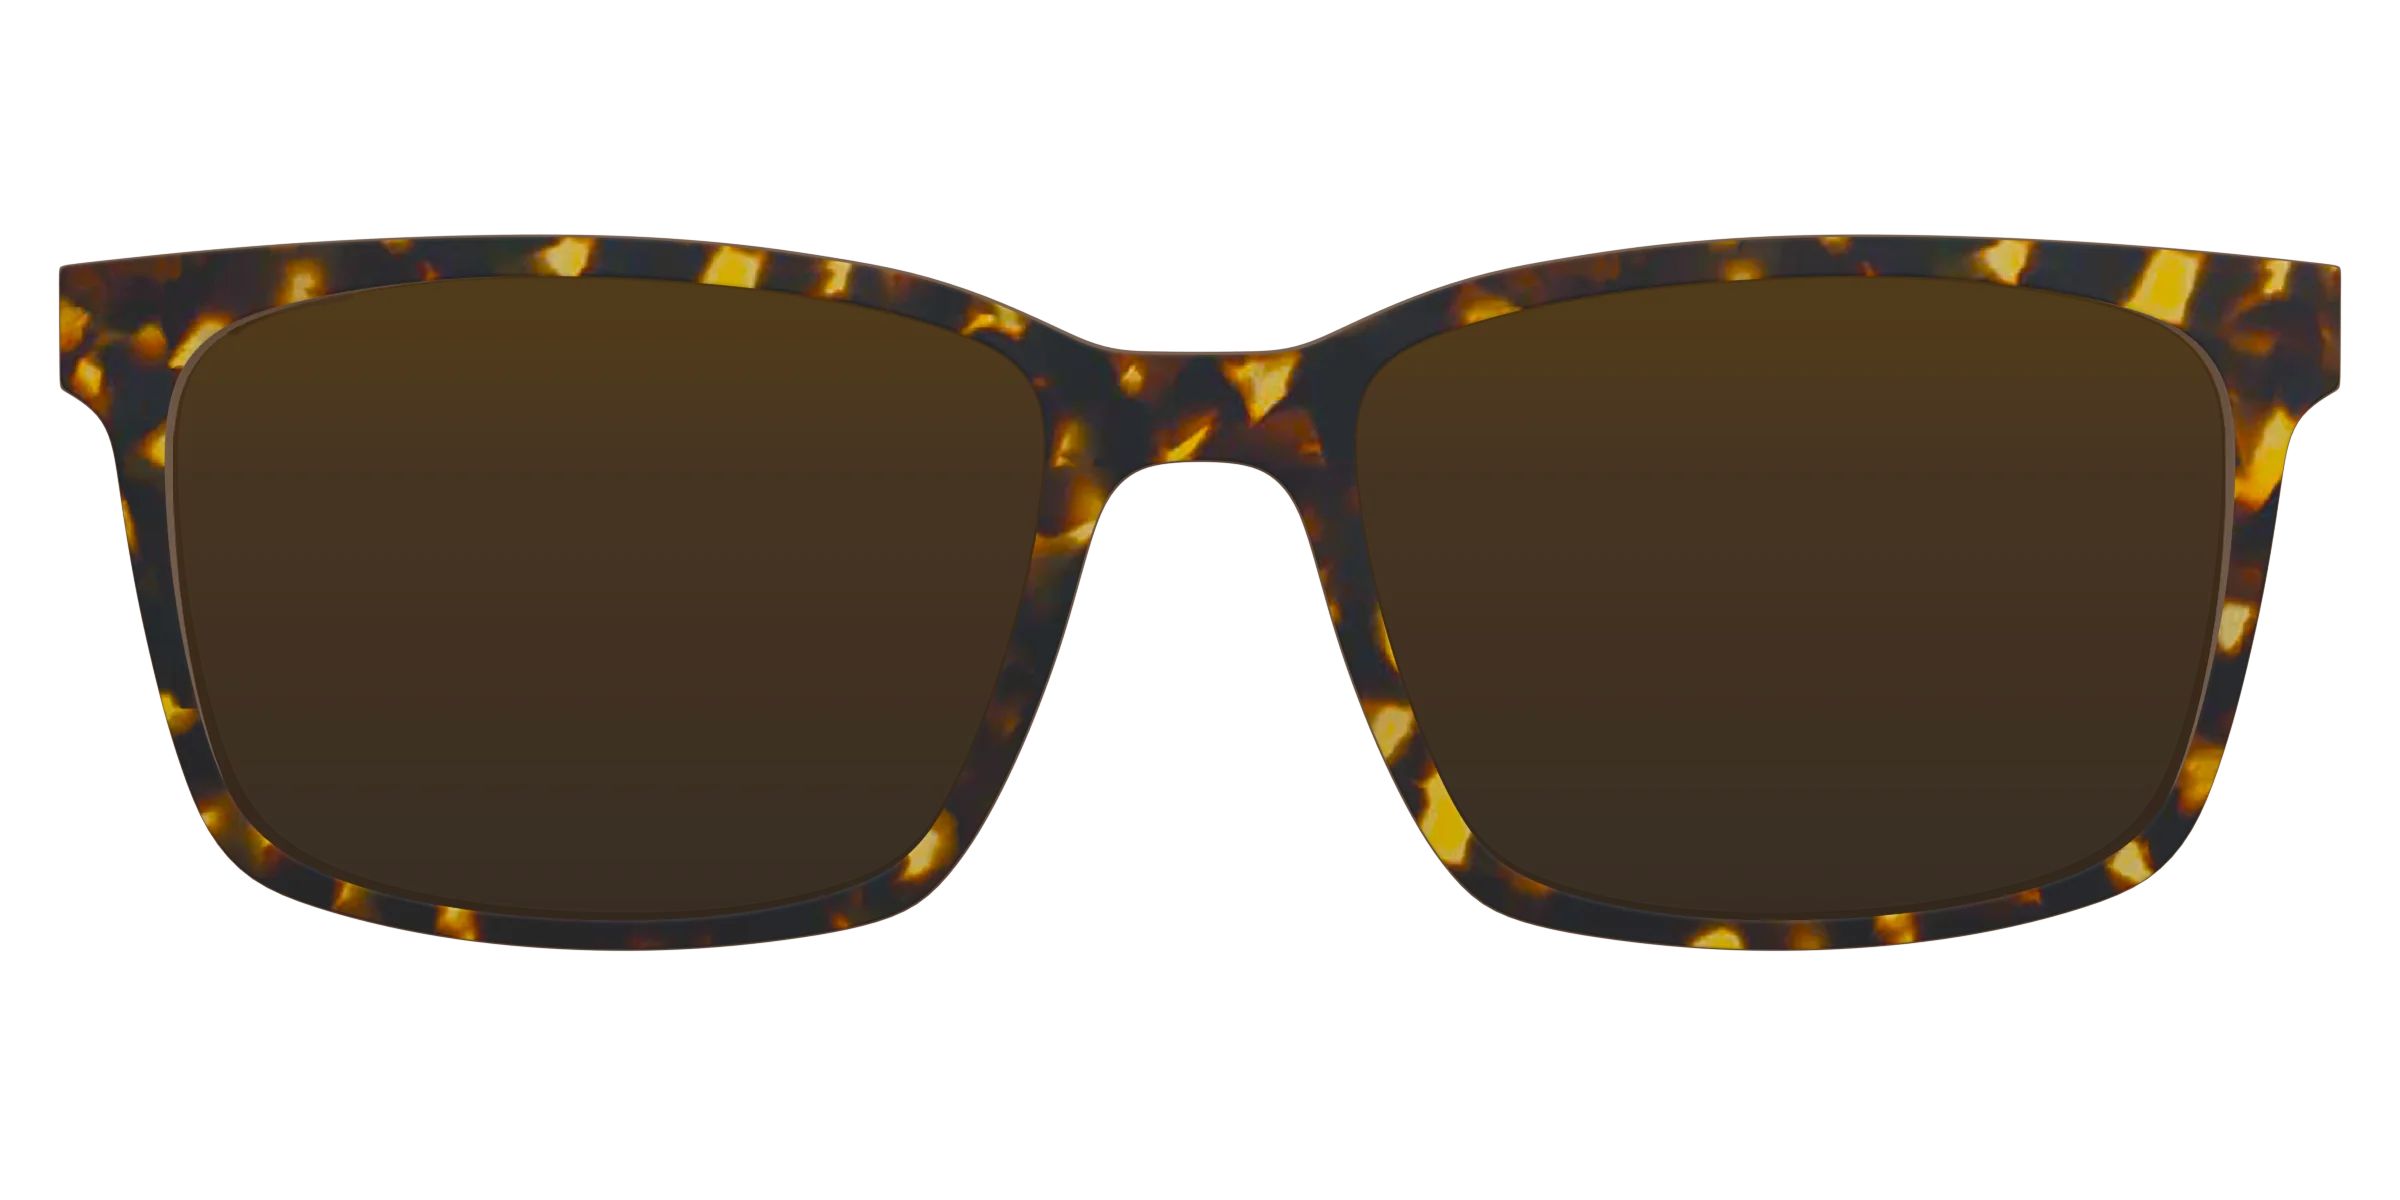 The Tortoise Sun Top | Pair Eyewear